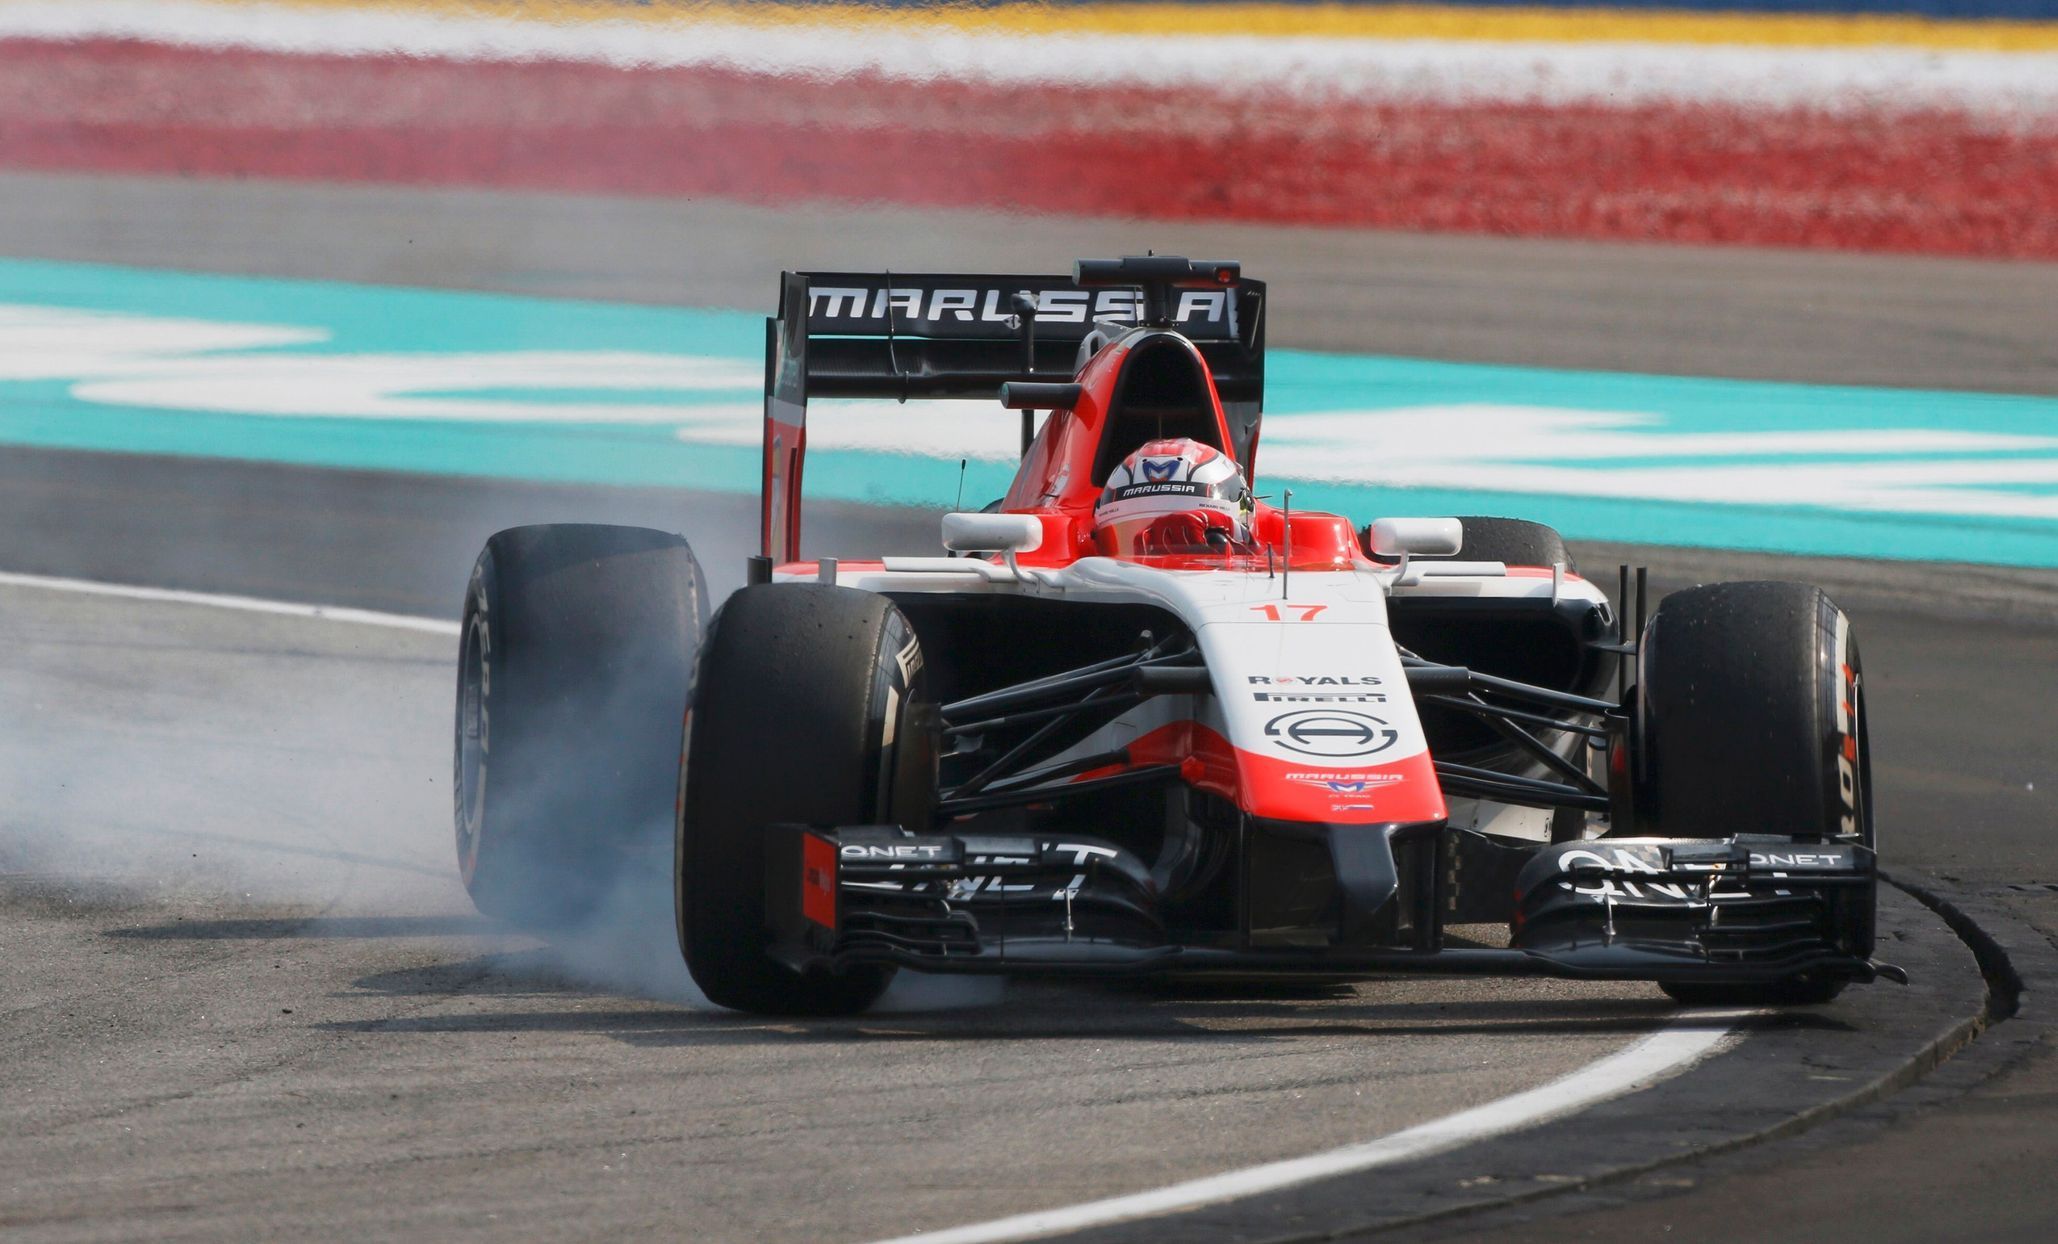 Marussia Formula One driver Bianchi brakes as he takes a corner during the Malaysian F1 Grand Prix at Sepang International Circuit outside Kuala Lumpur